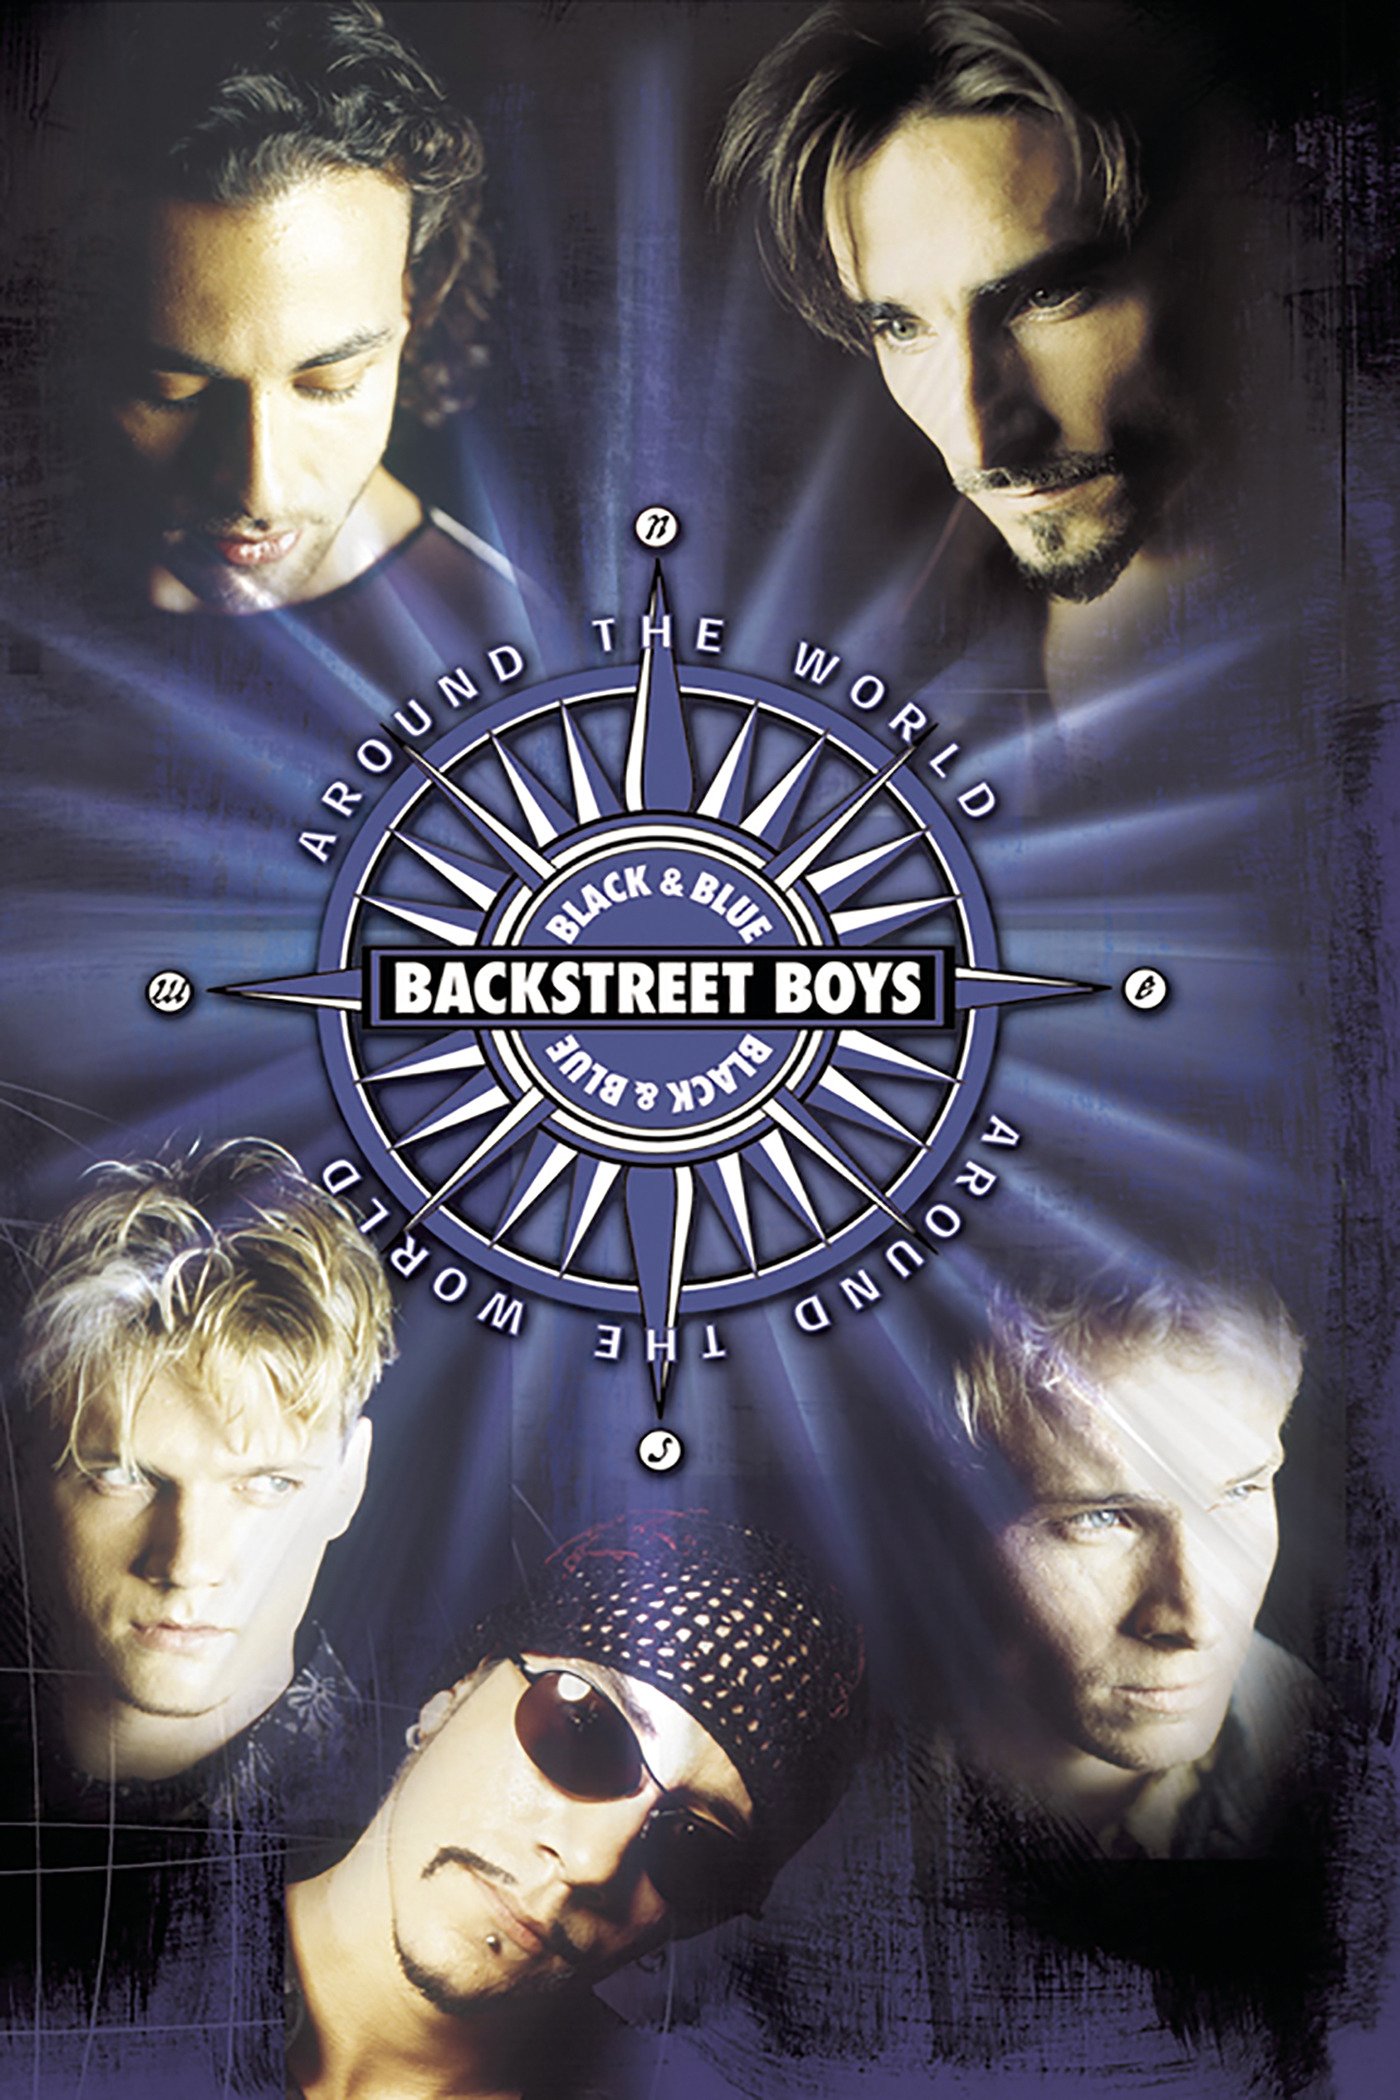 Backstreet Boys Wallpapers